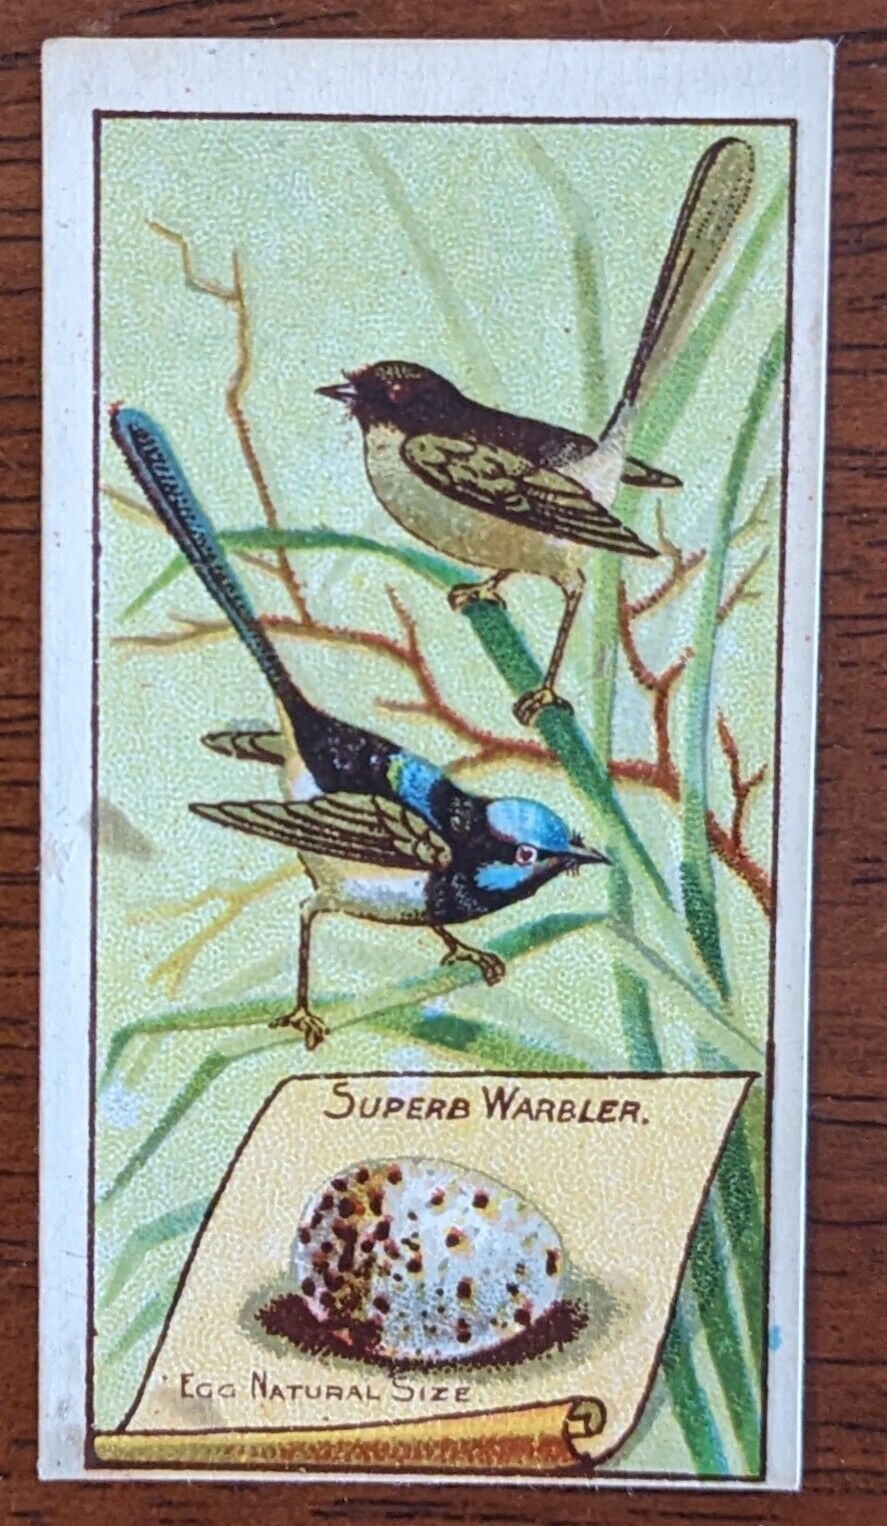 1912 Wills Vice Regal Birds of Australasia Cigarette Card - Superb Warbler.